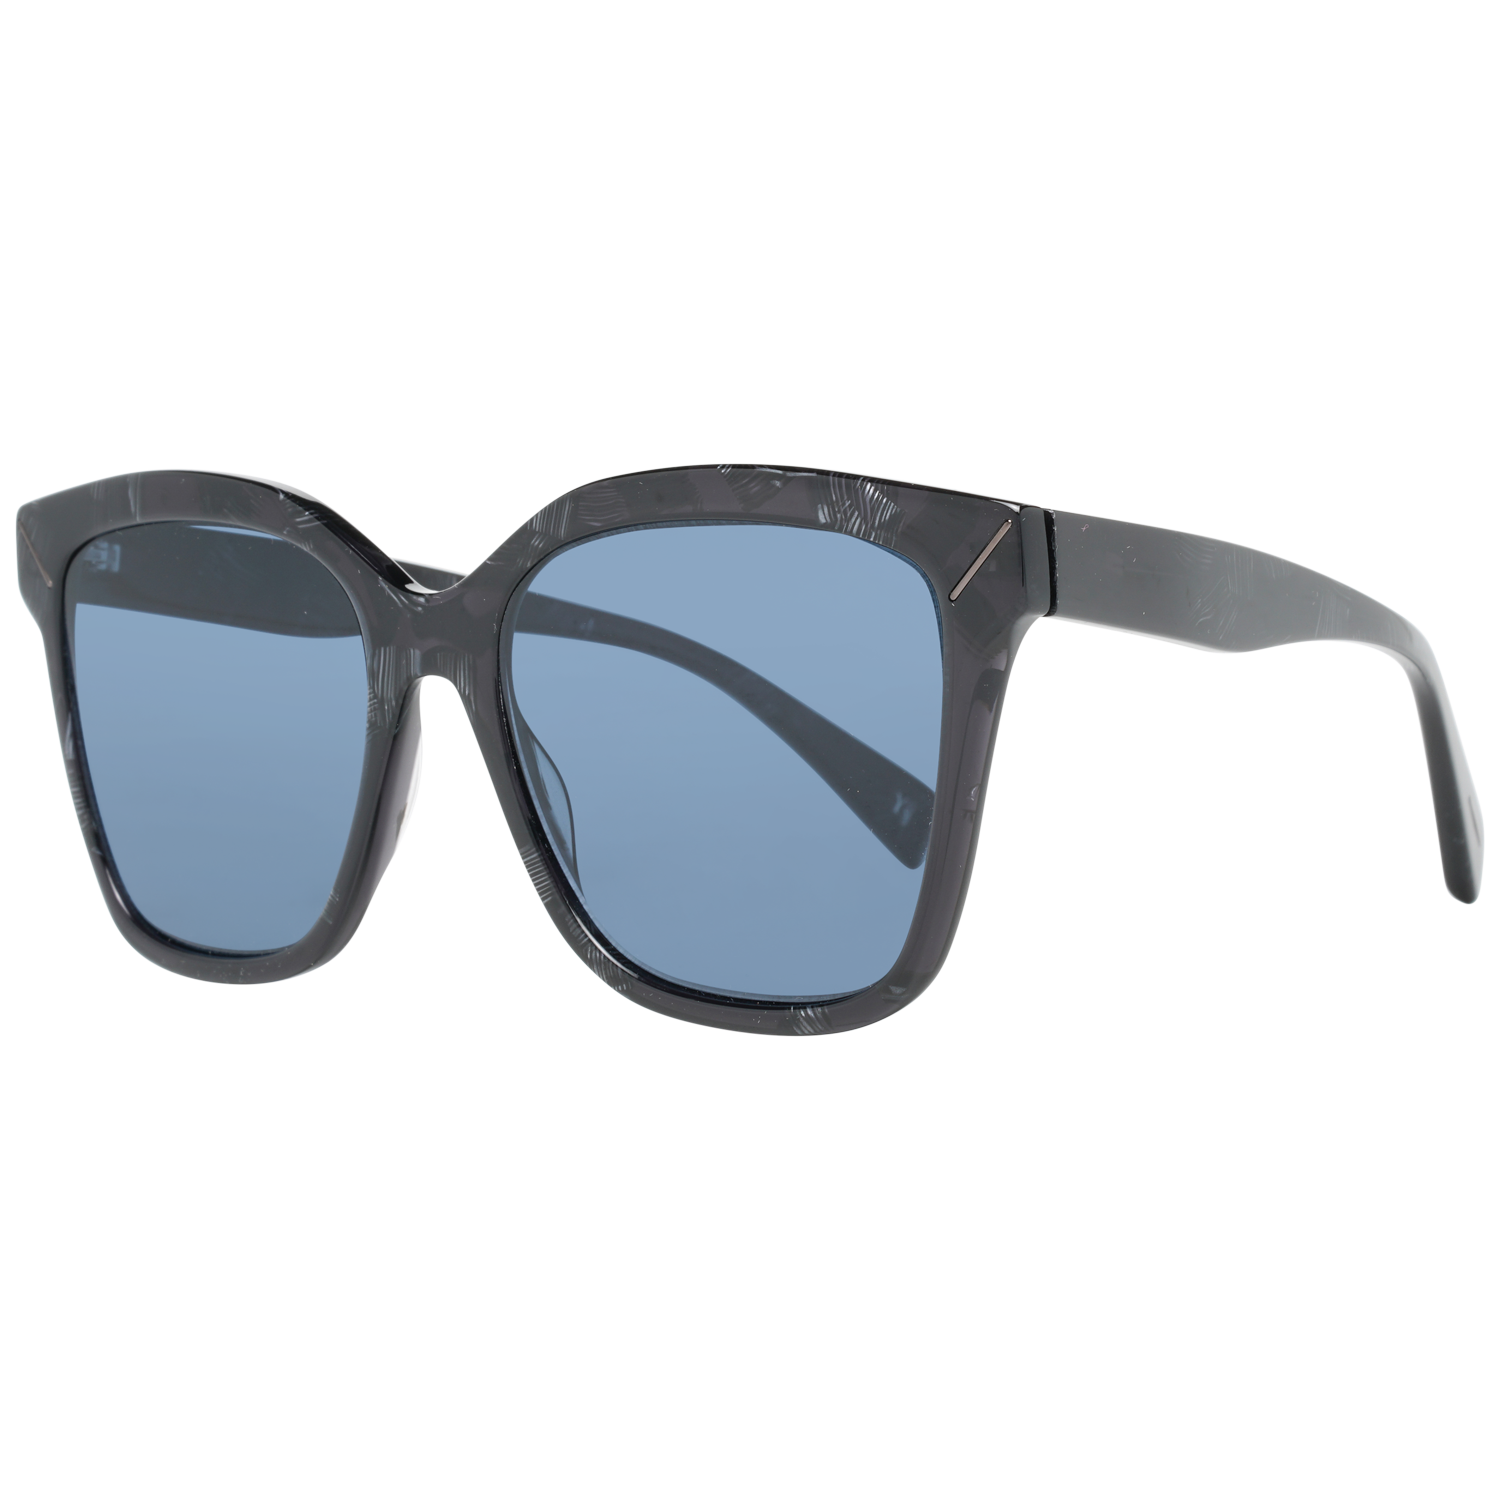 Yohji Yamamoto Sunglasses YS5002 024 55 Black